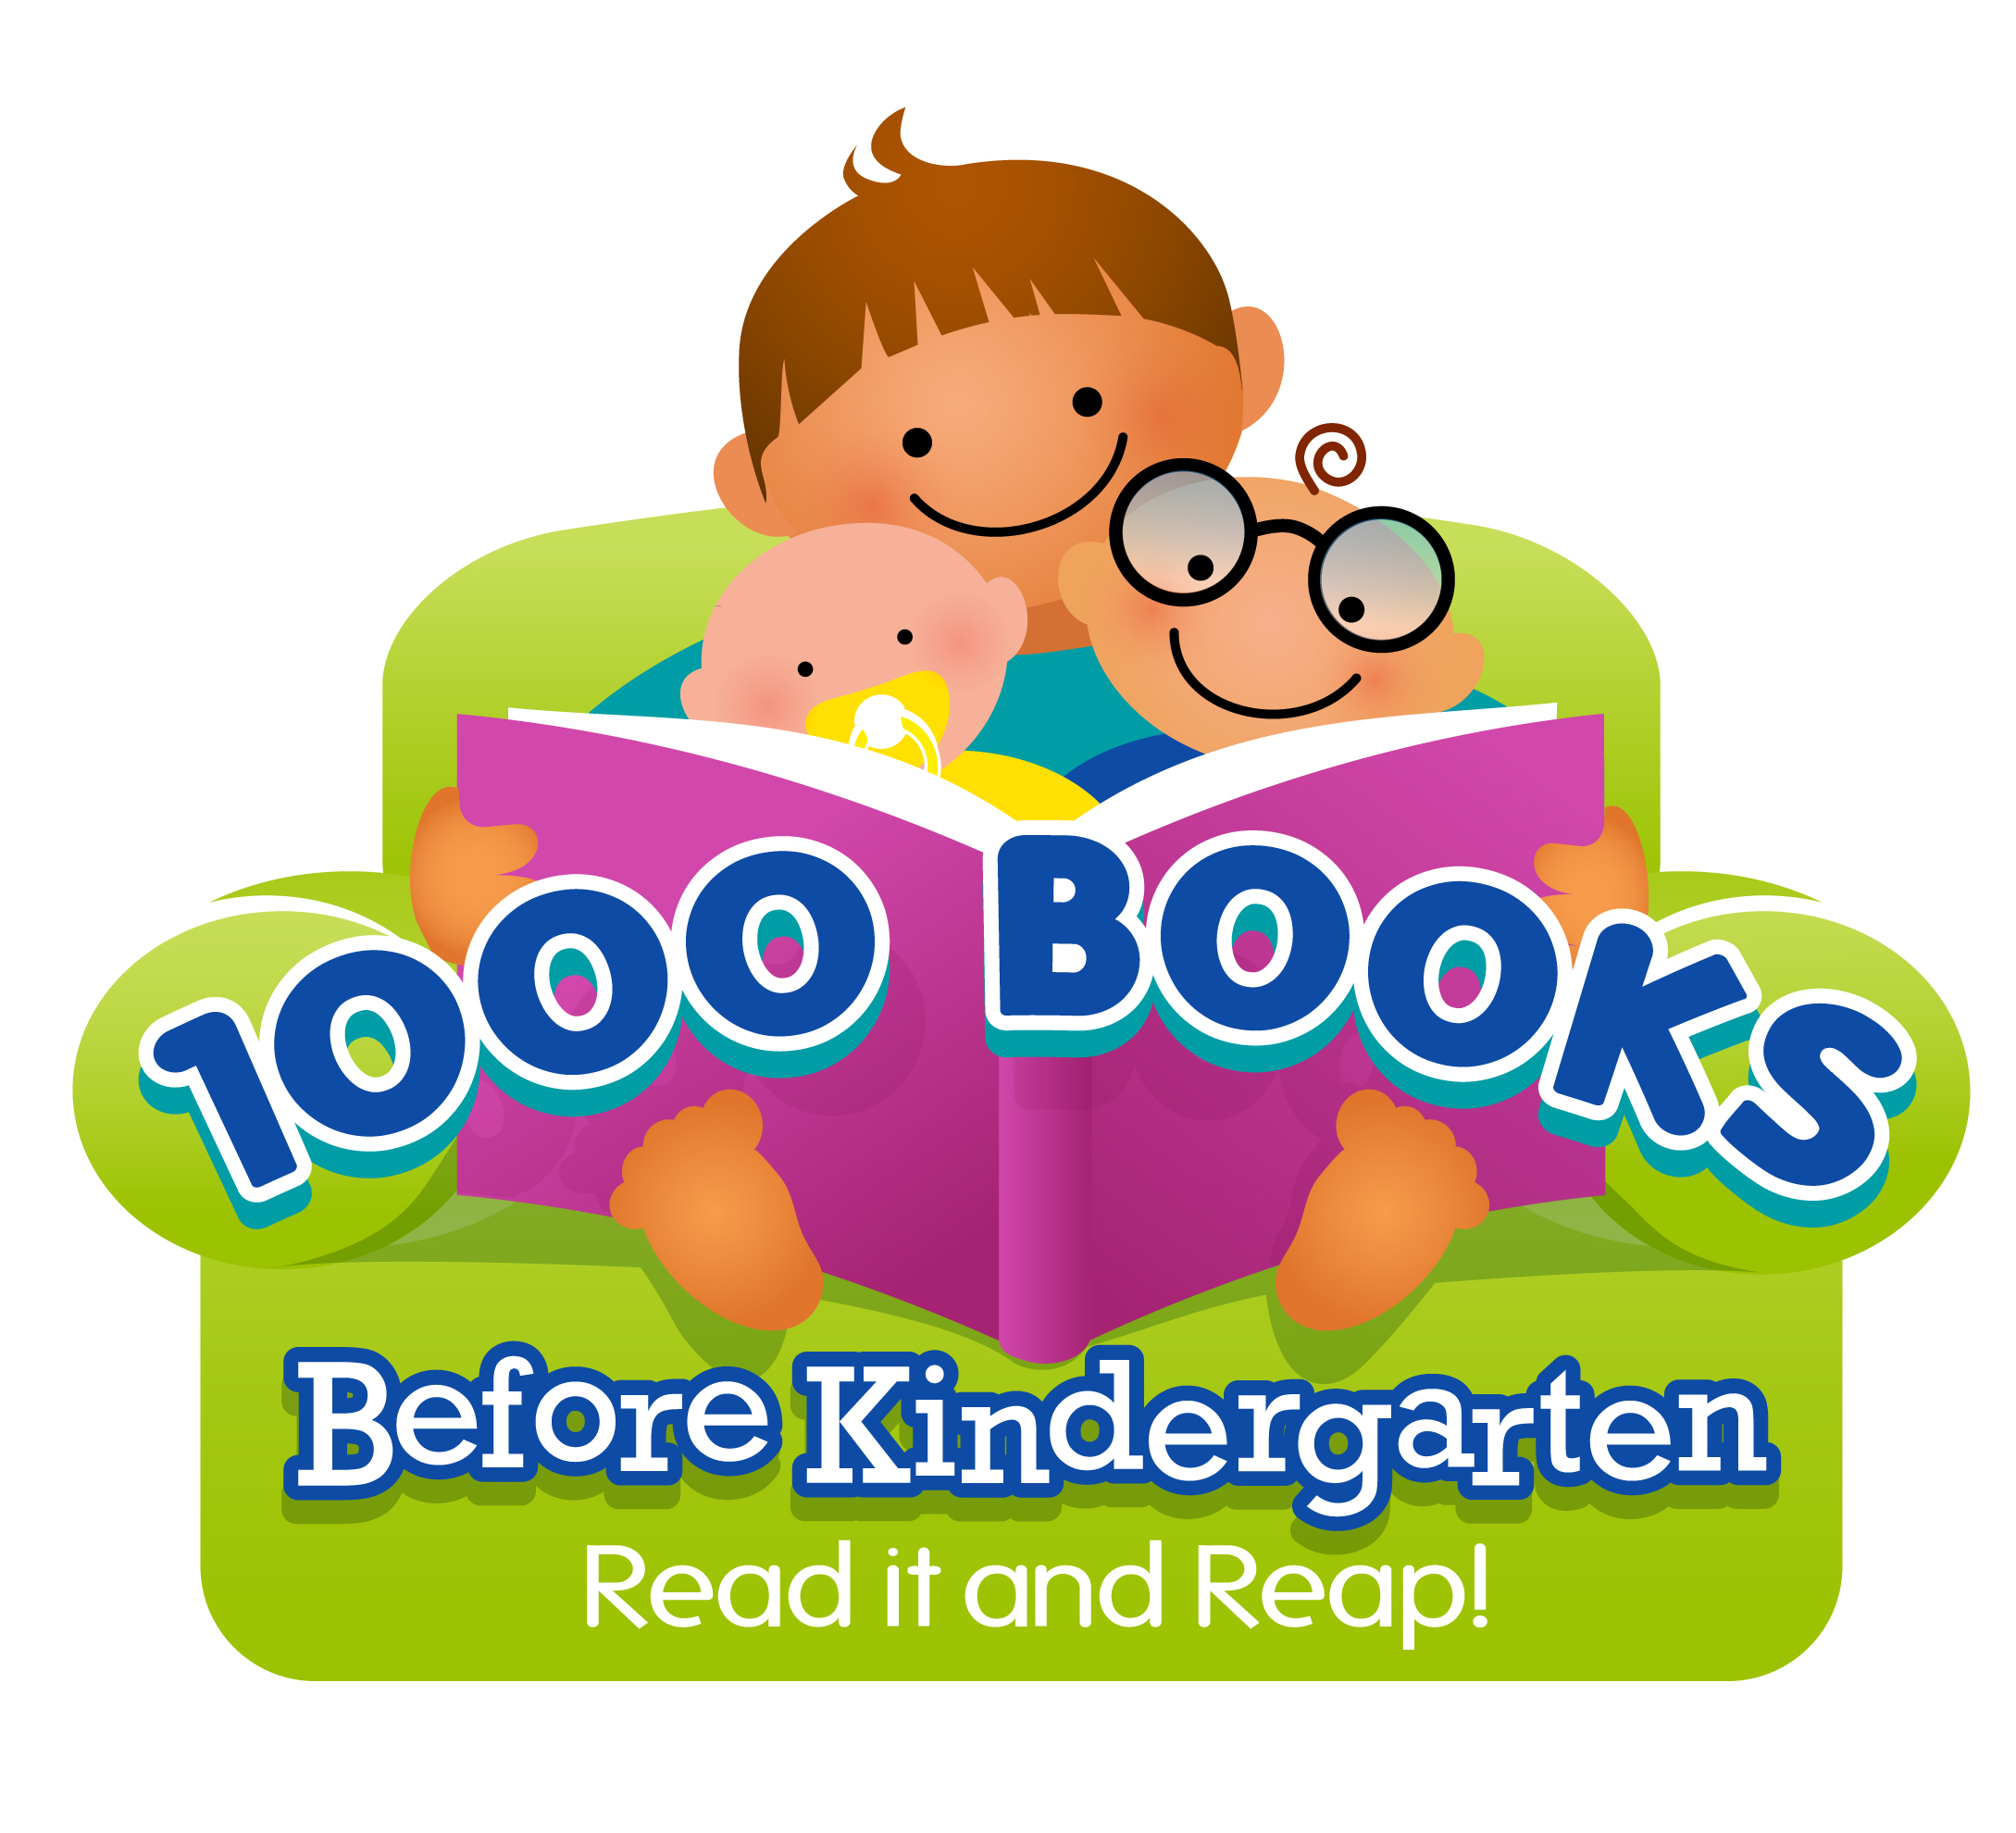 1,000 Books Logo